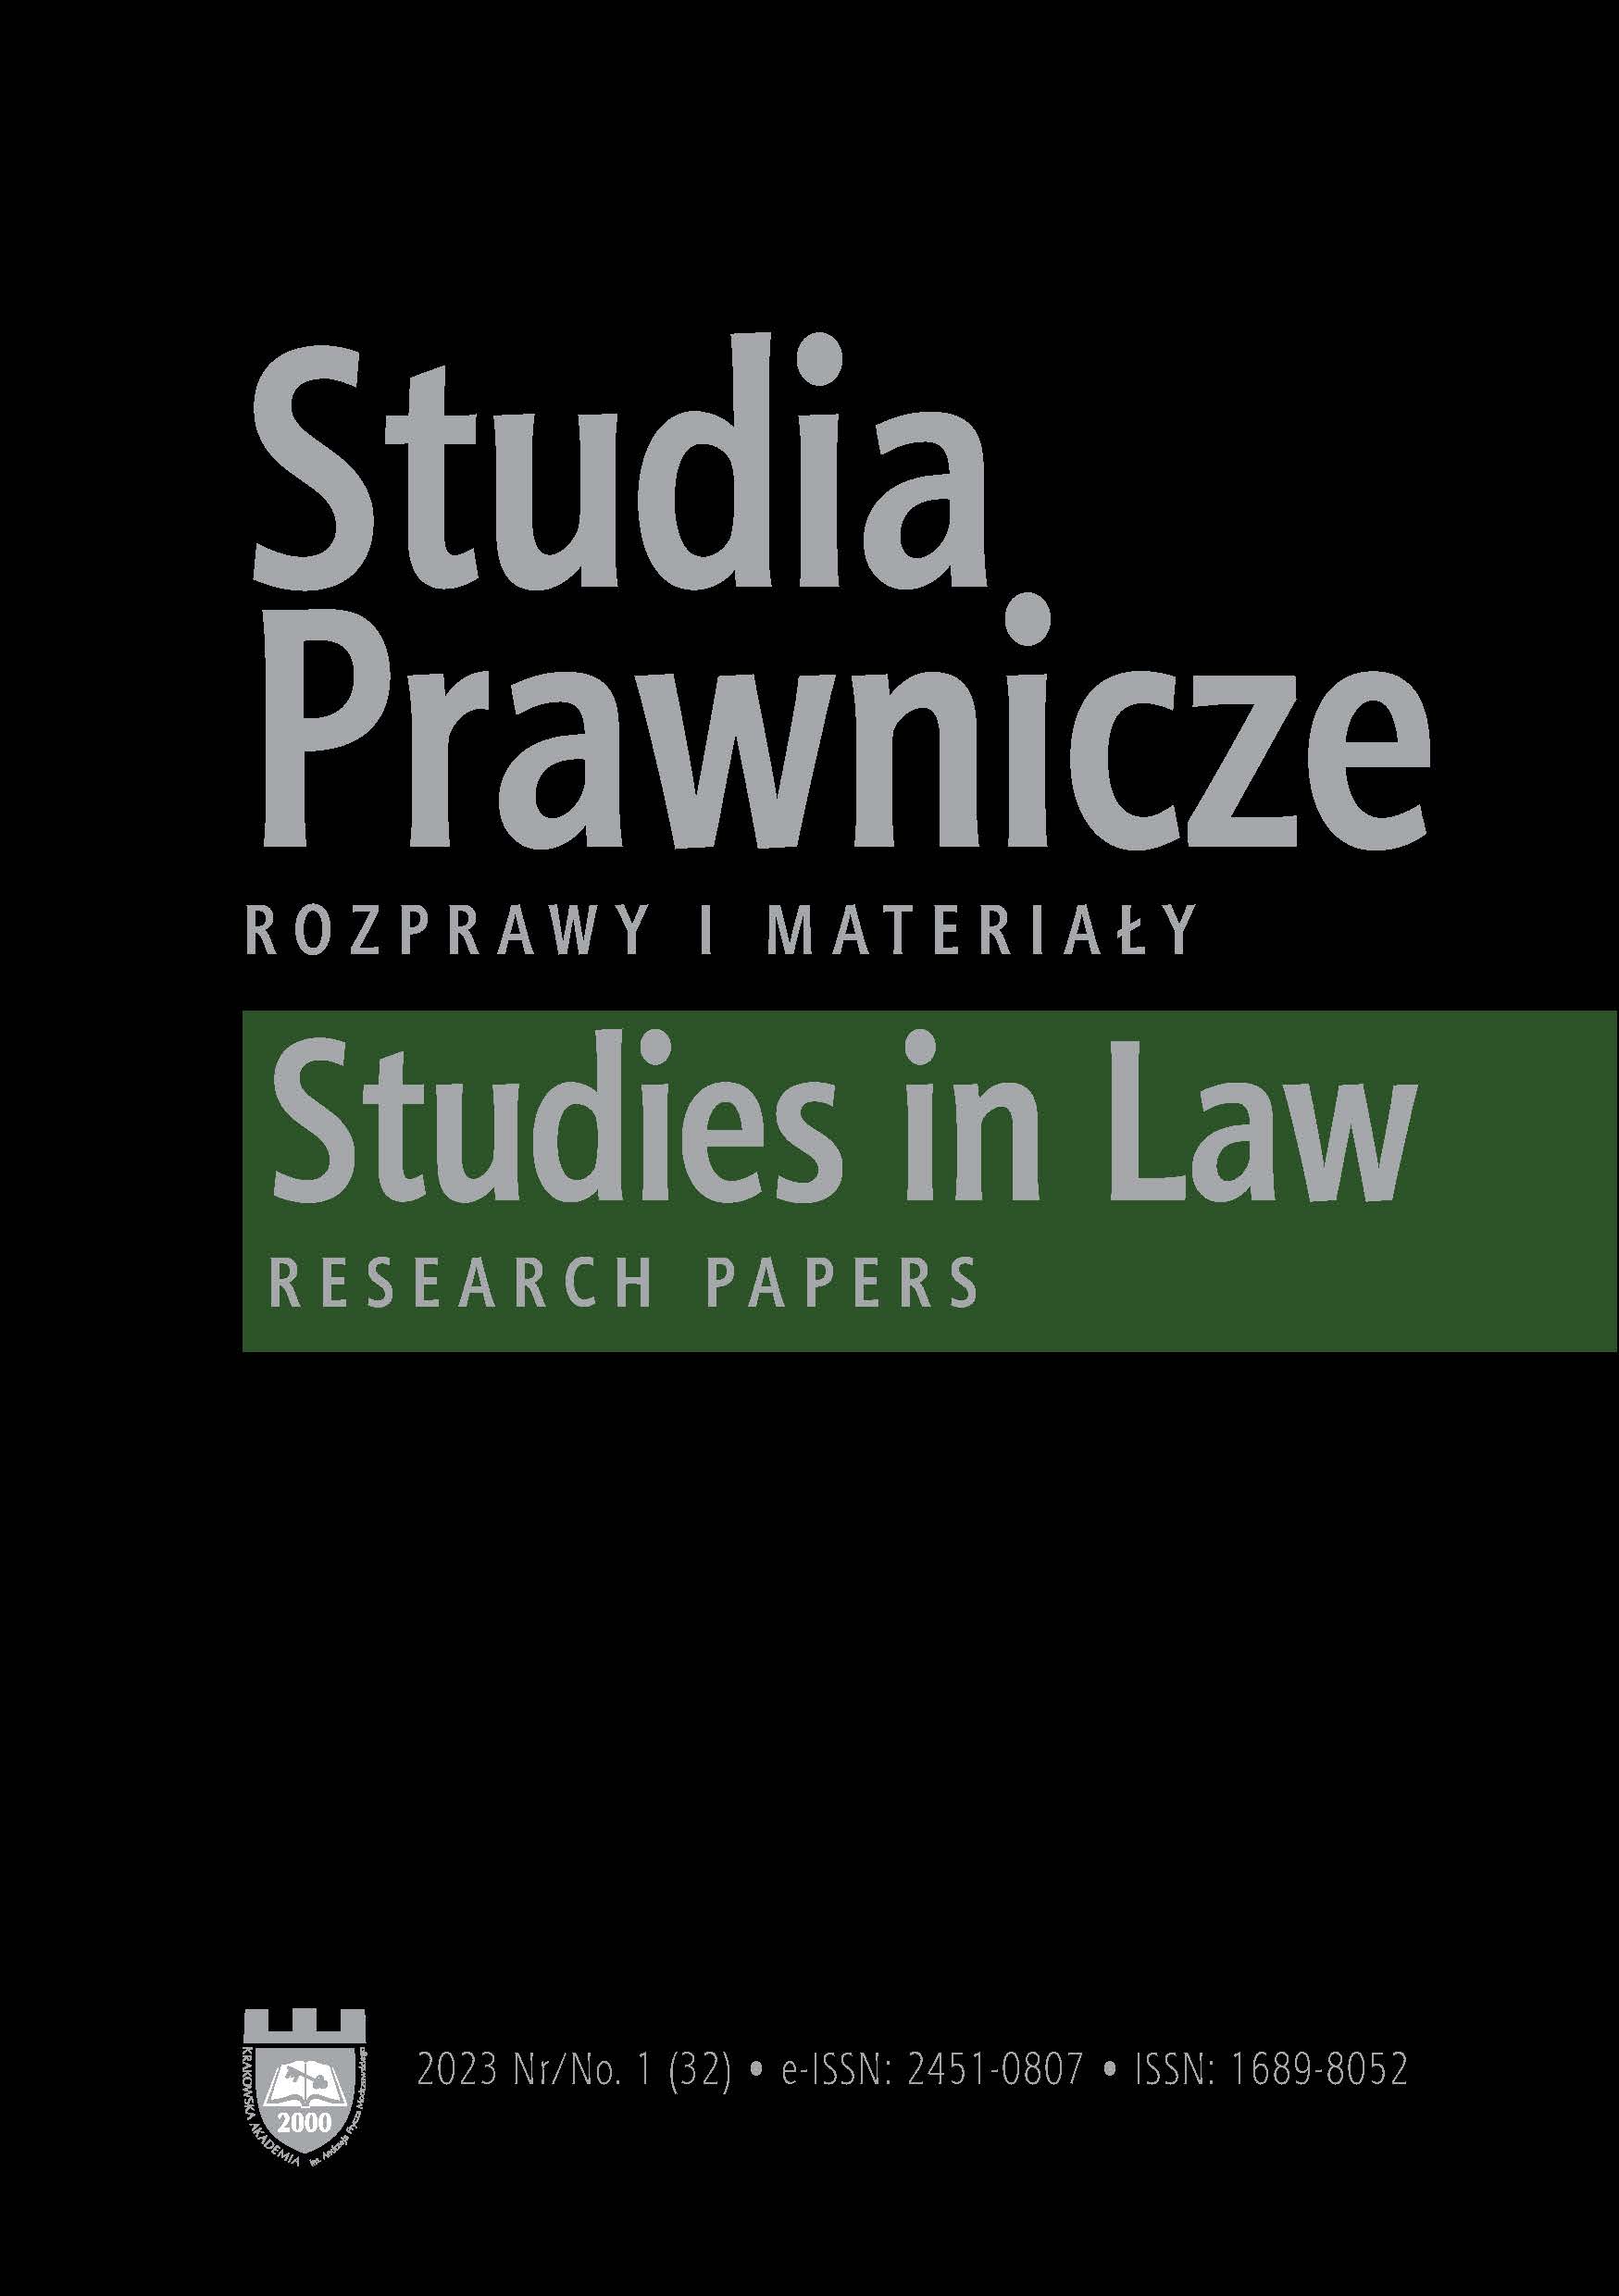 Report on the public defense of Paweł Klimek's doctoral dissertation Cover Image